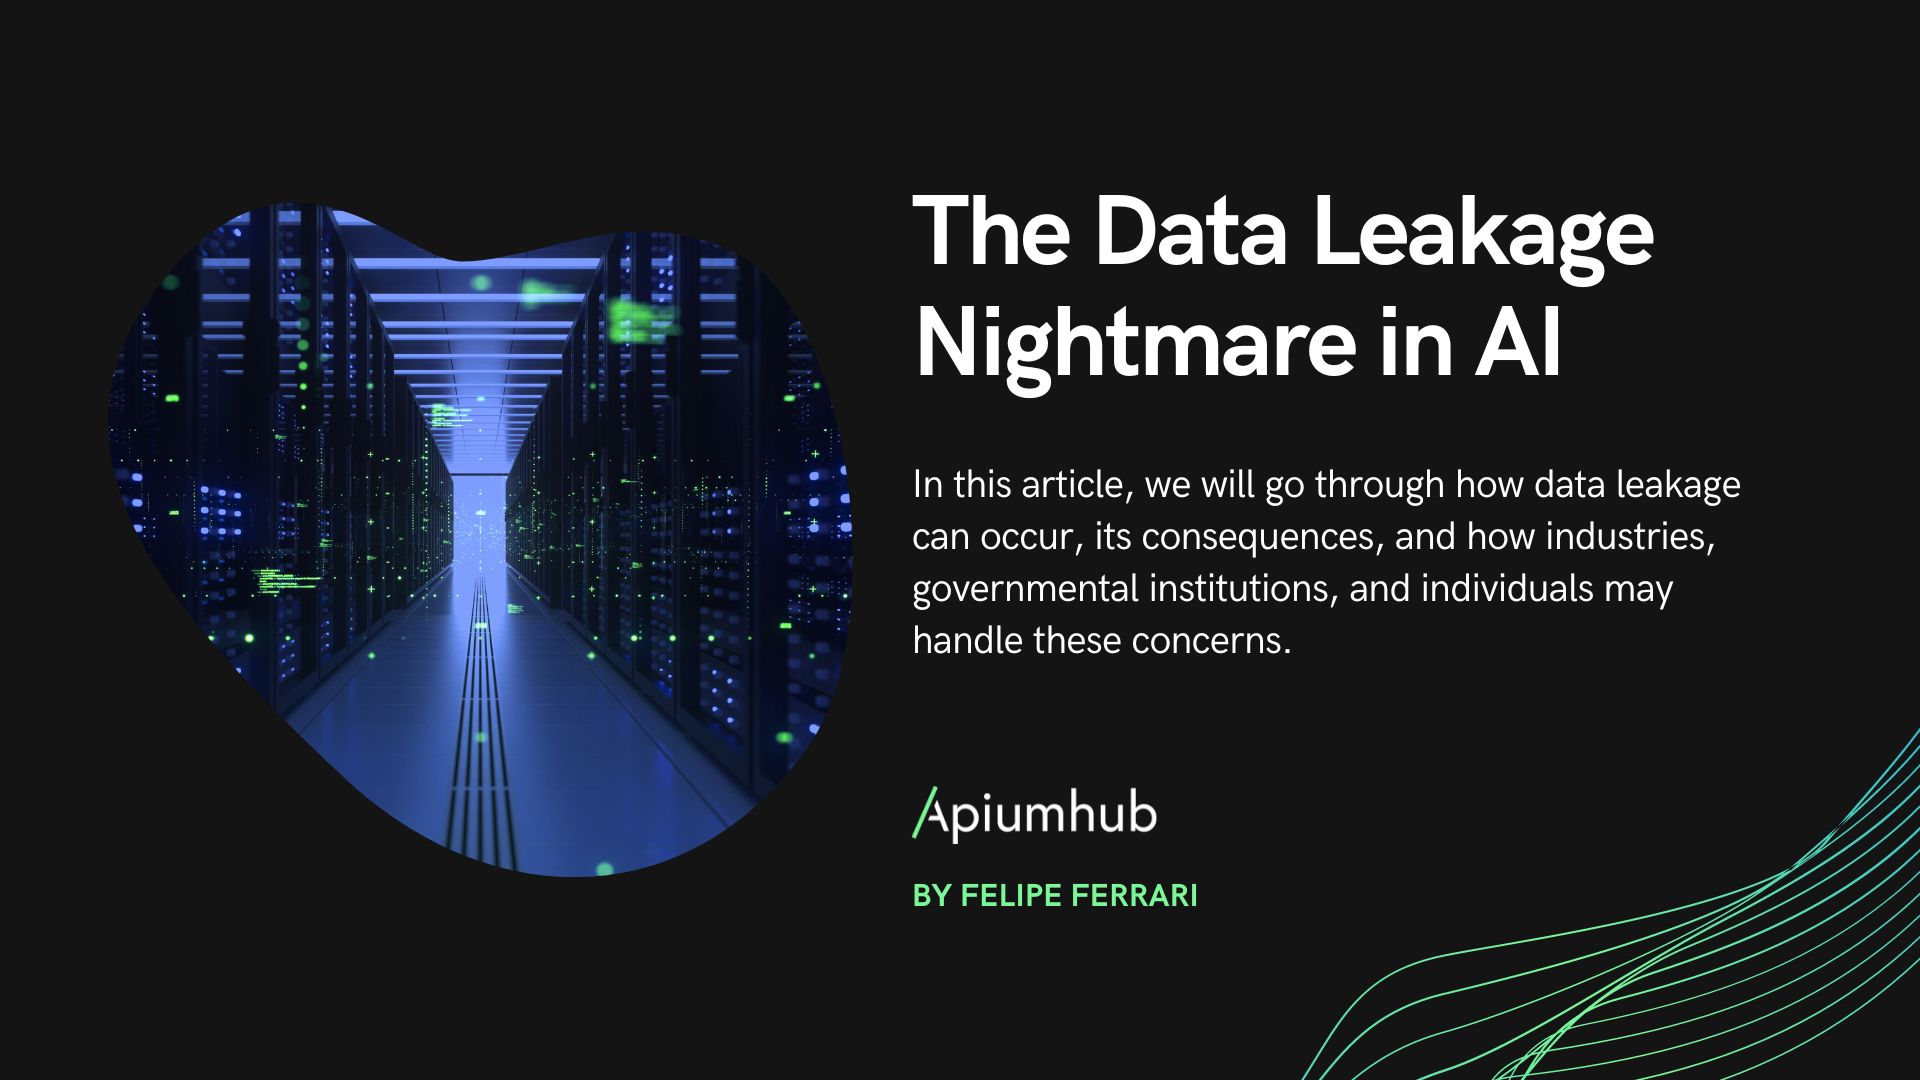 The data leakage nightmare in AI